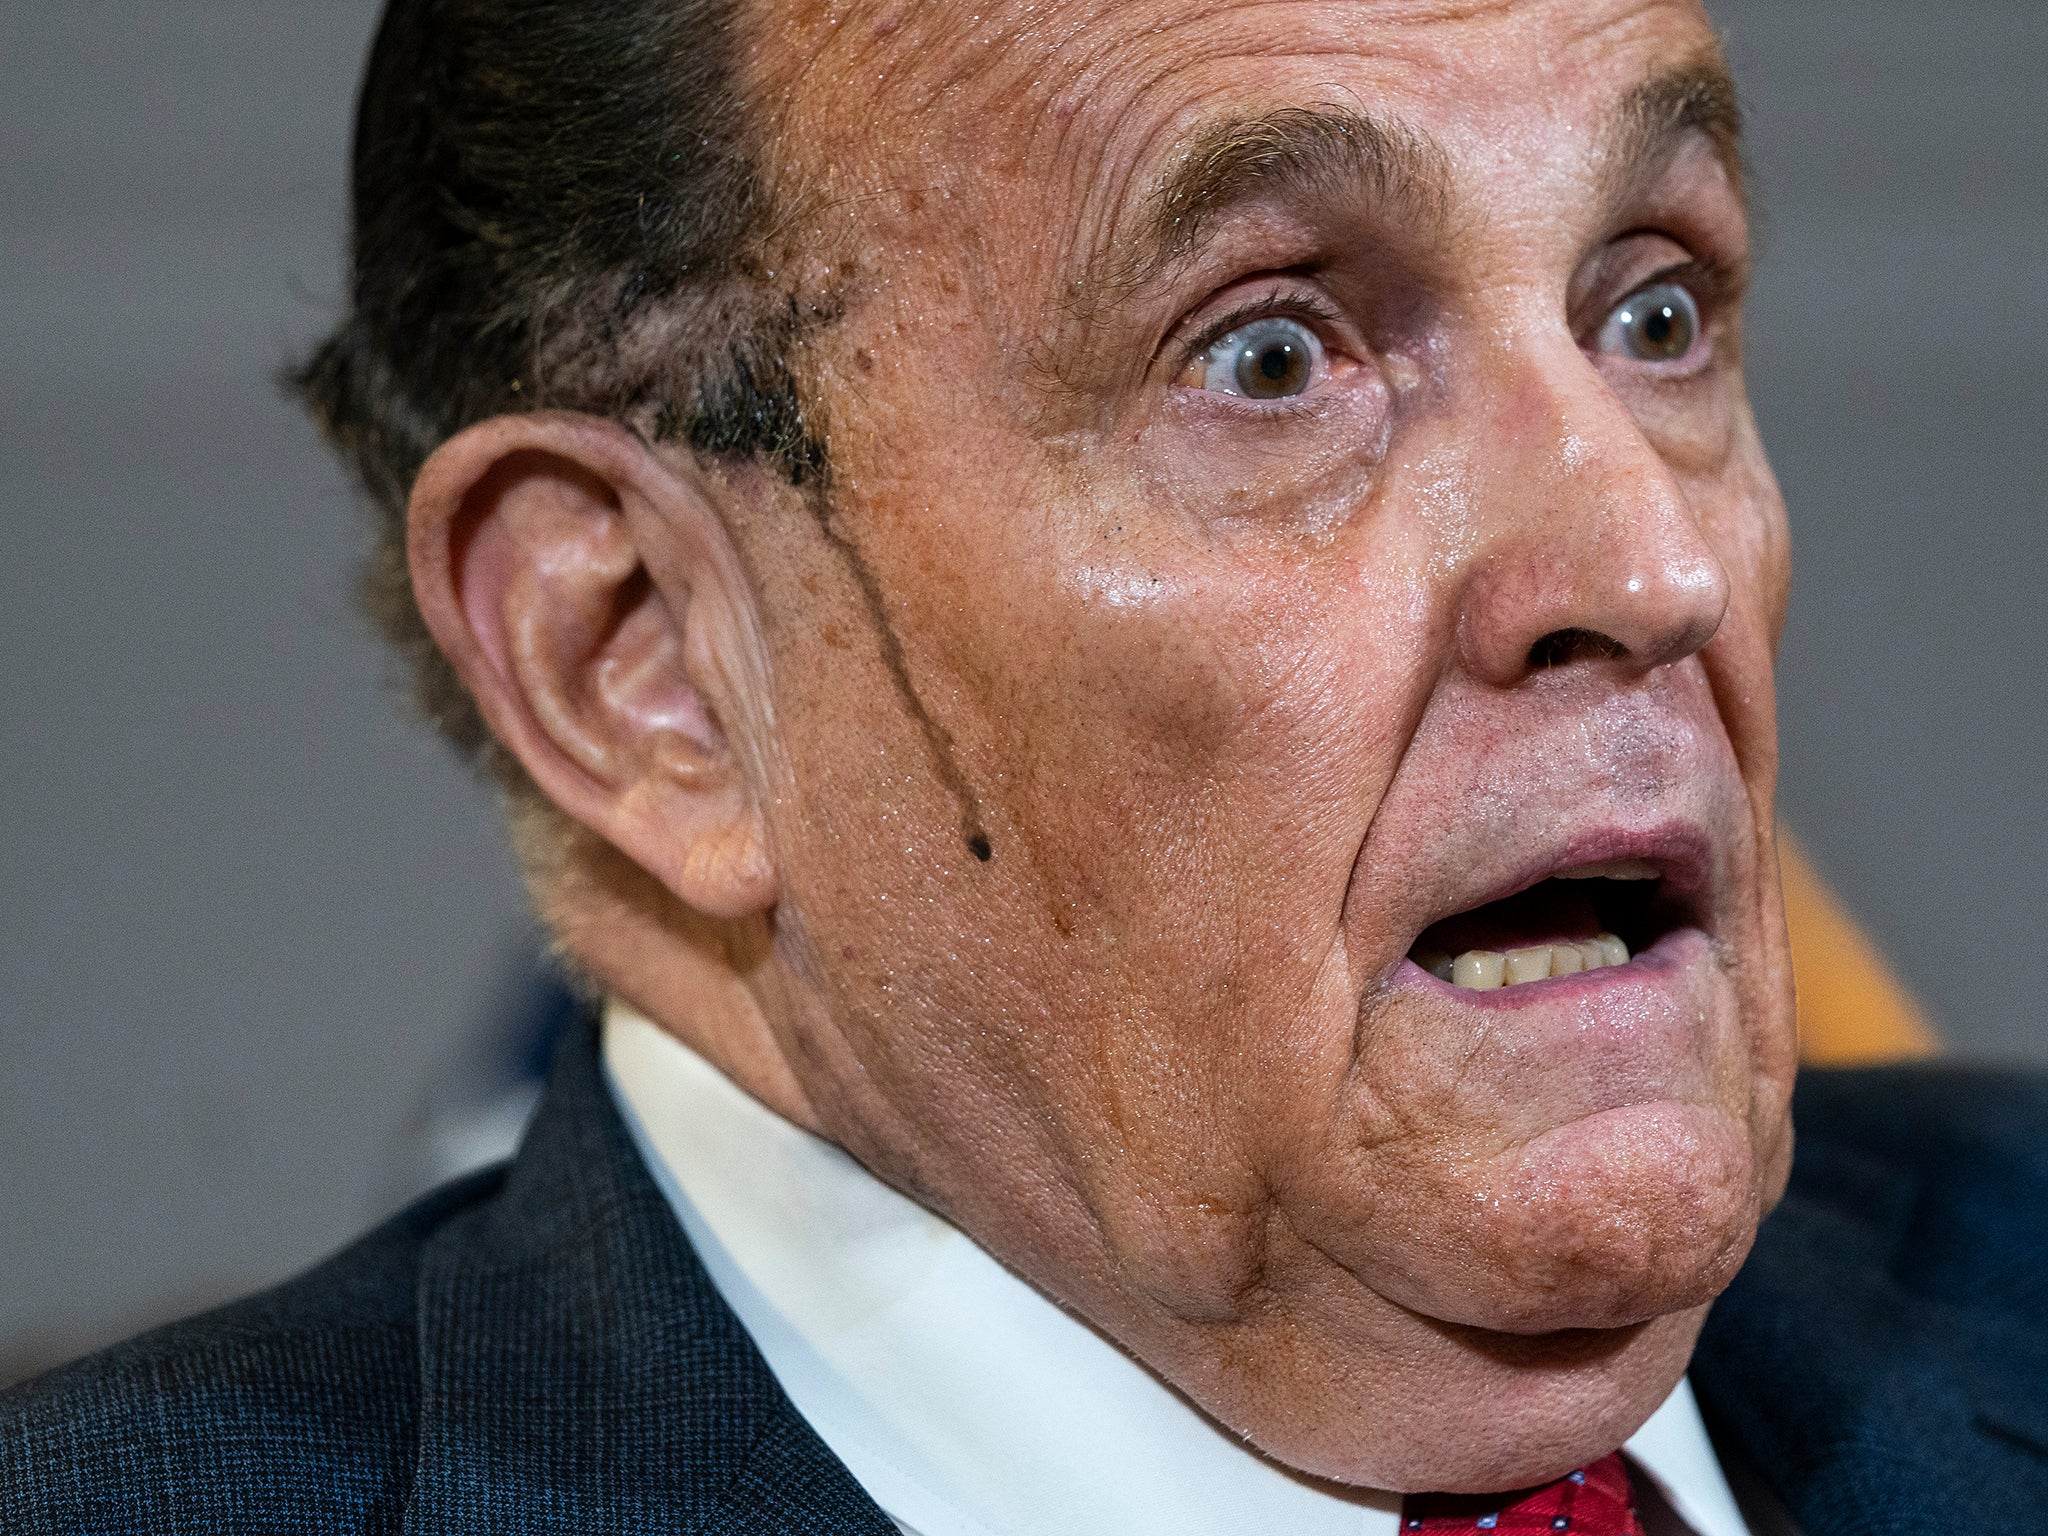 Hair dye runs down Giuliani’s cheek during a bizarre appearance at a press conference